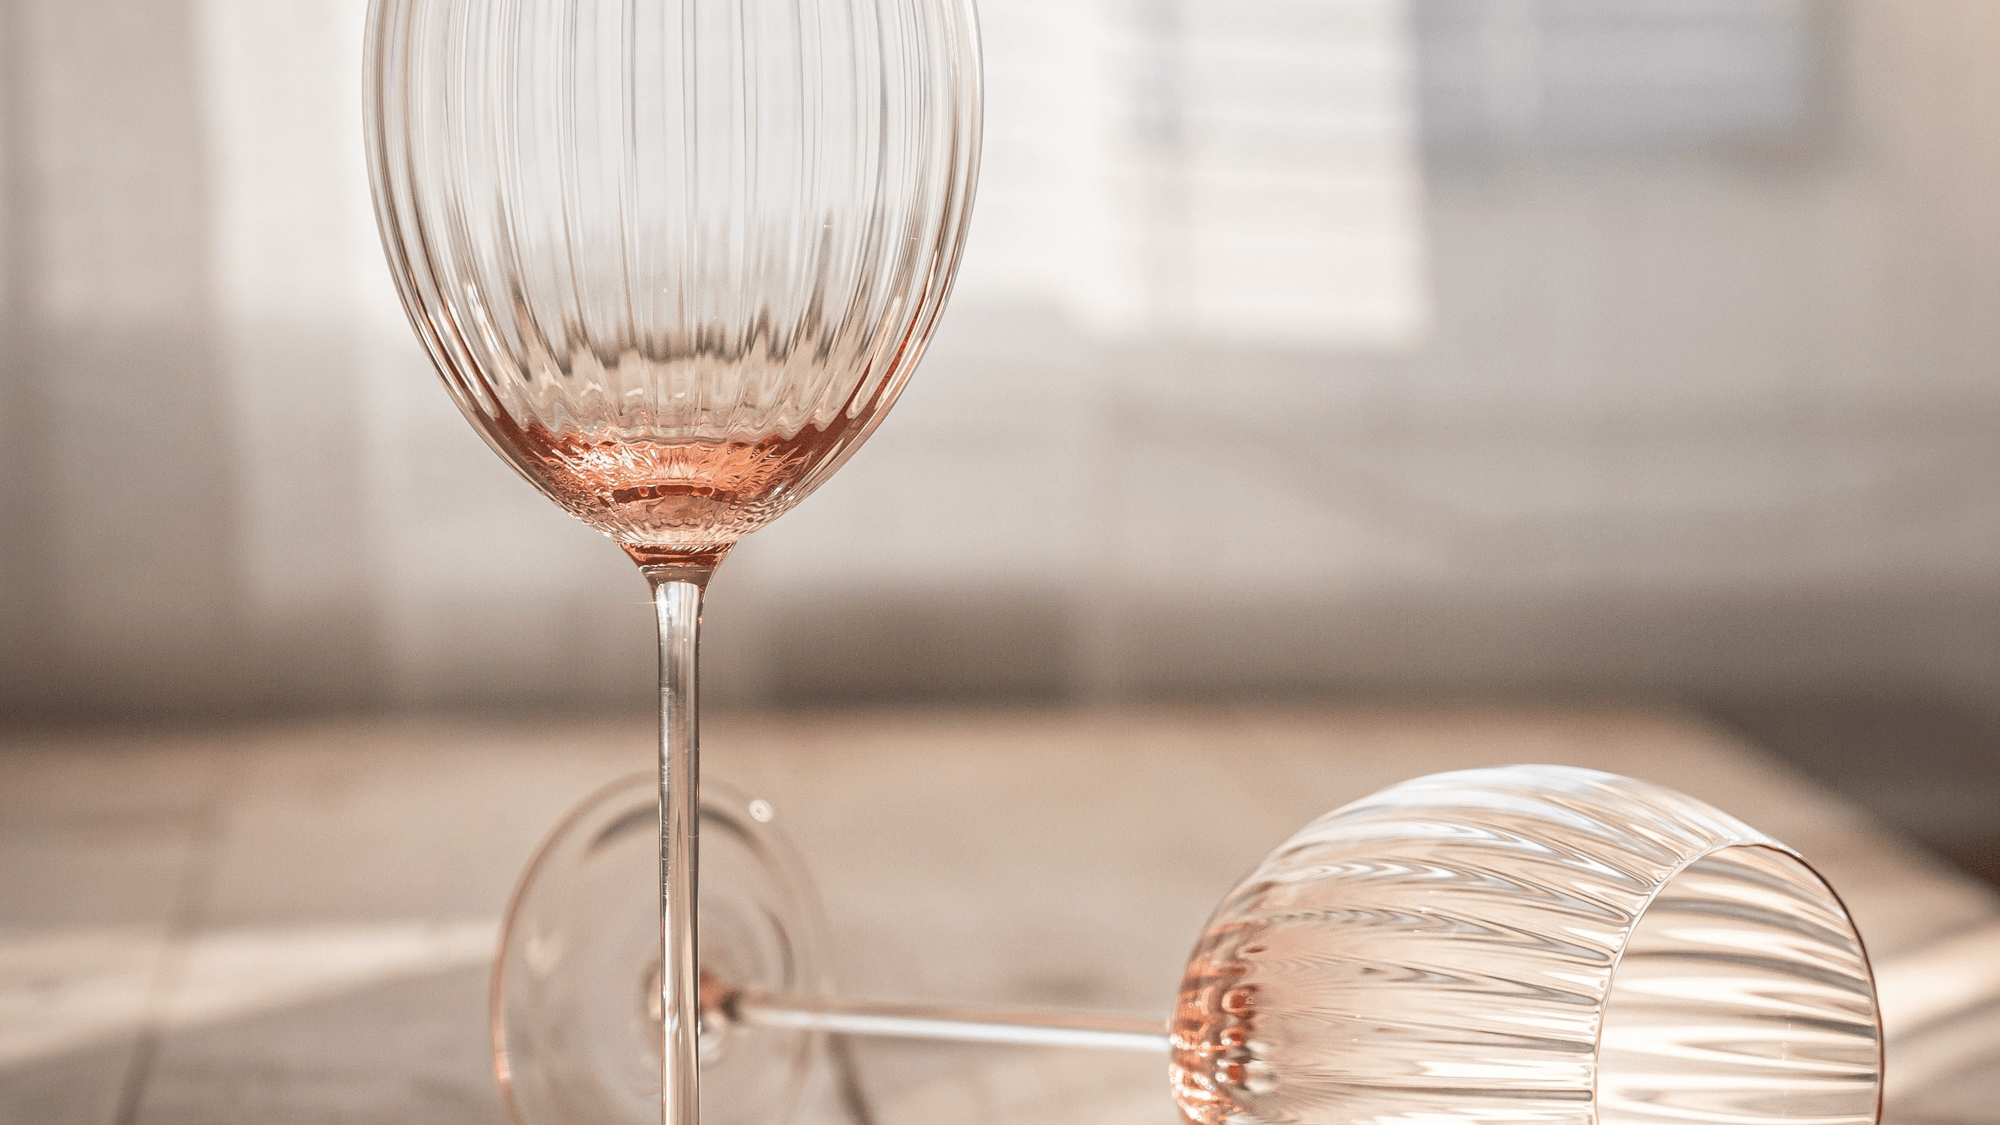 Lyon witte wijnglas - Rosa // Anna von Lipa (set van 2) table things